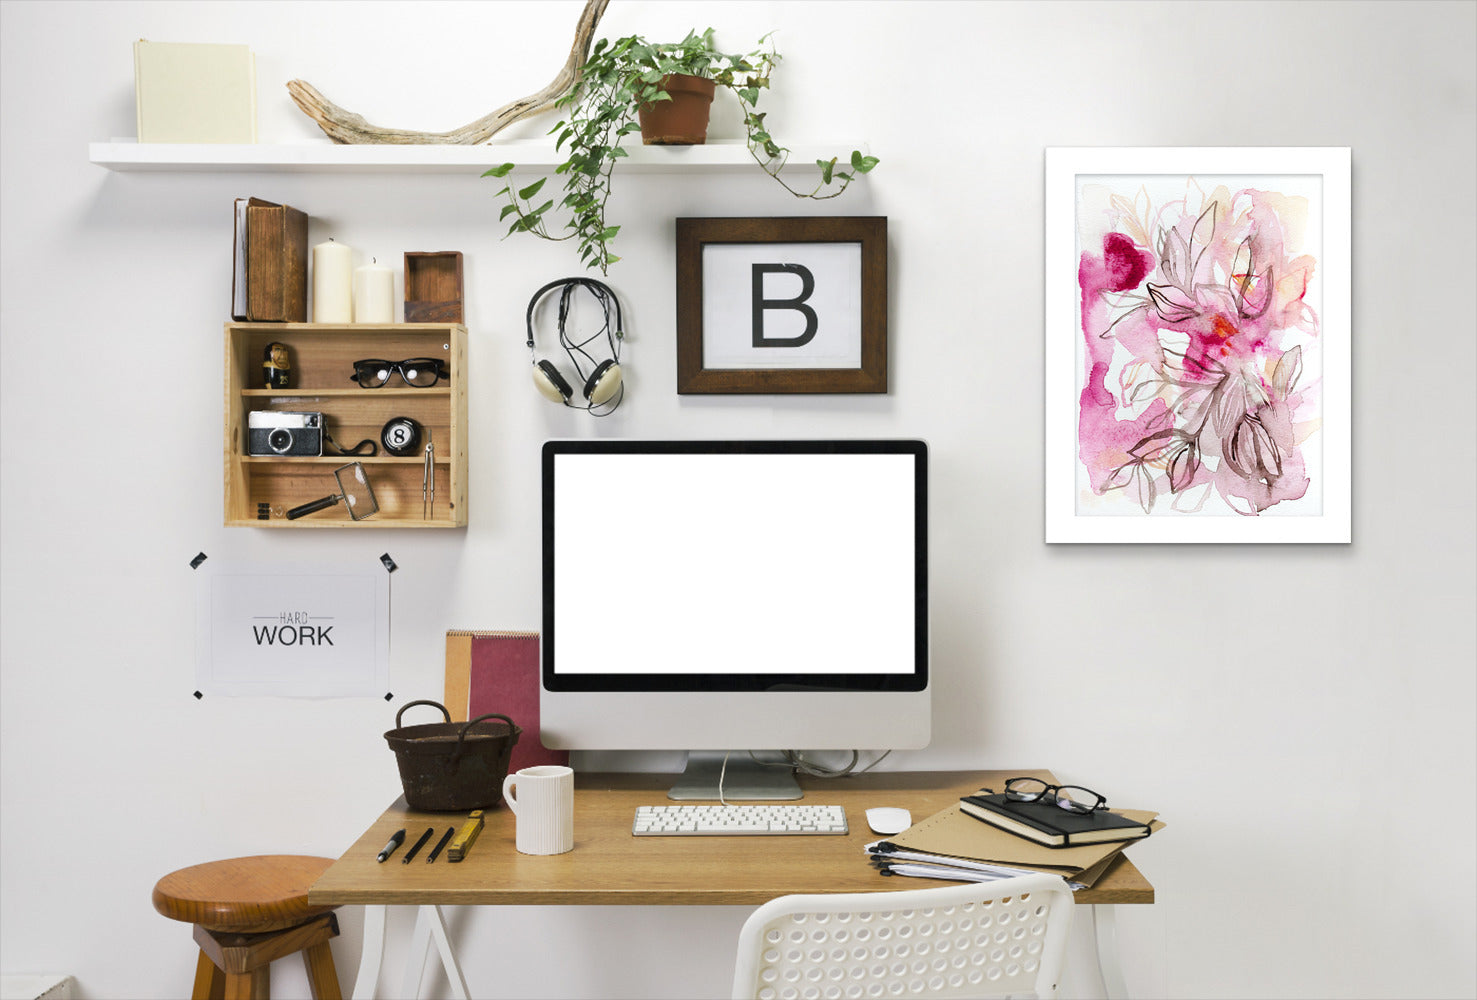 Blossom by Hope Bainbridge - Framed Print - Americanflat